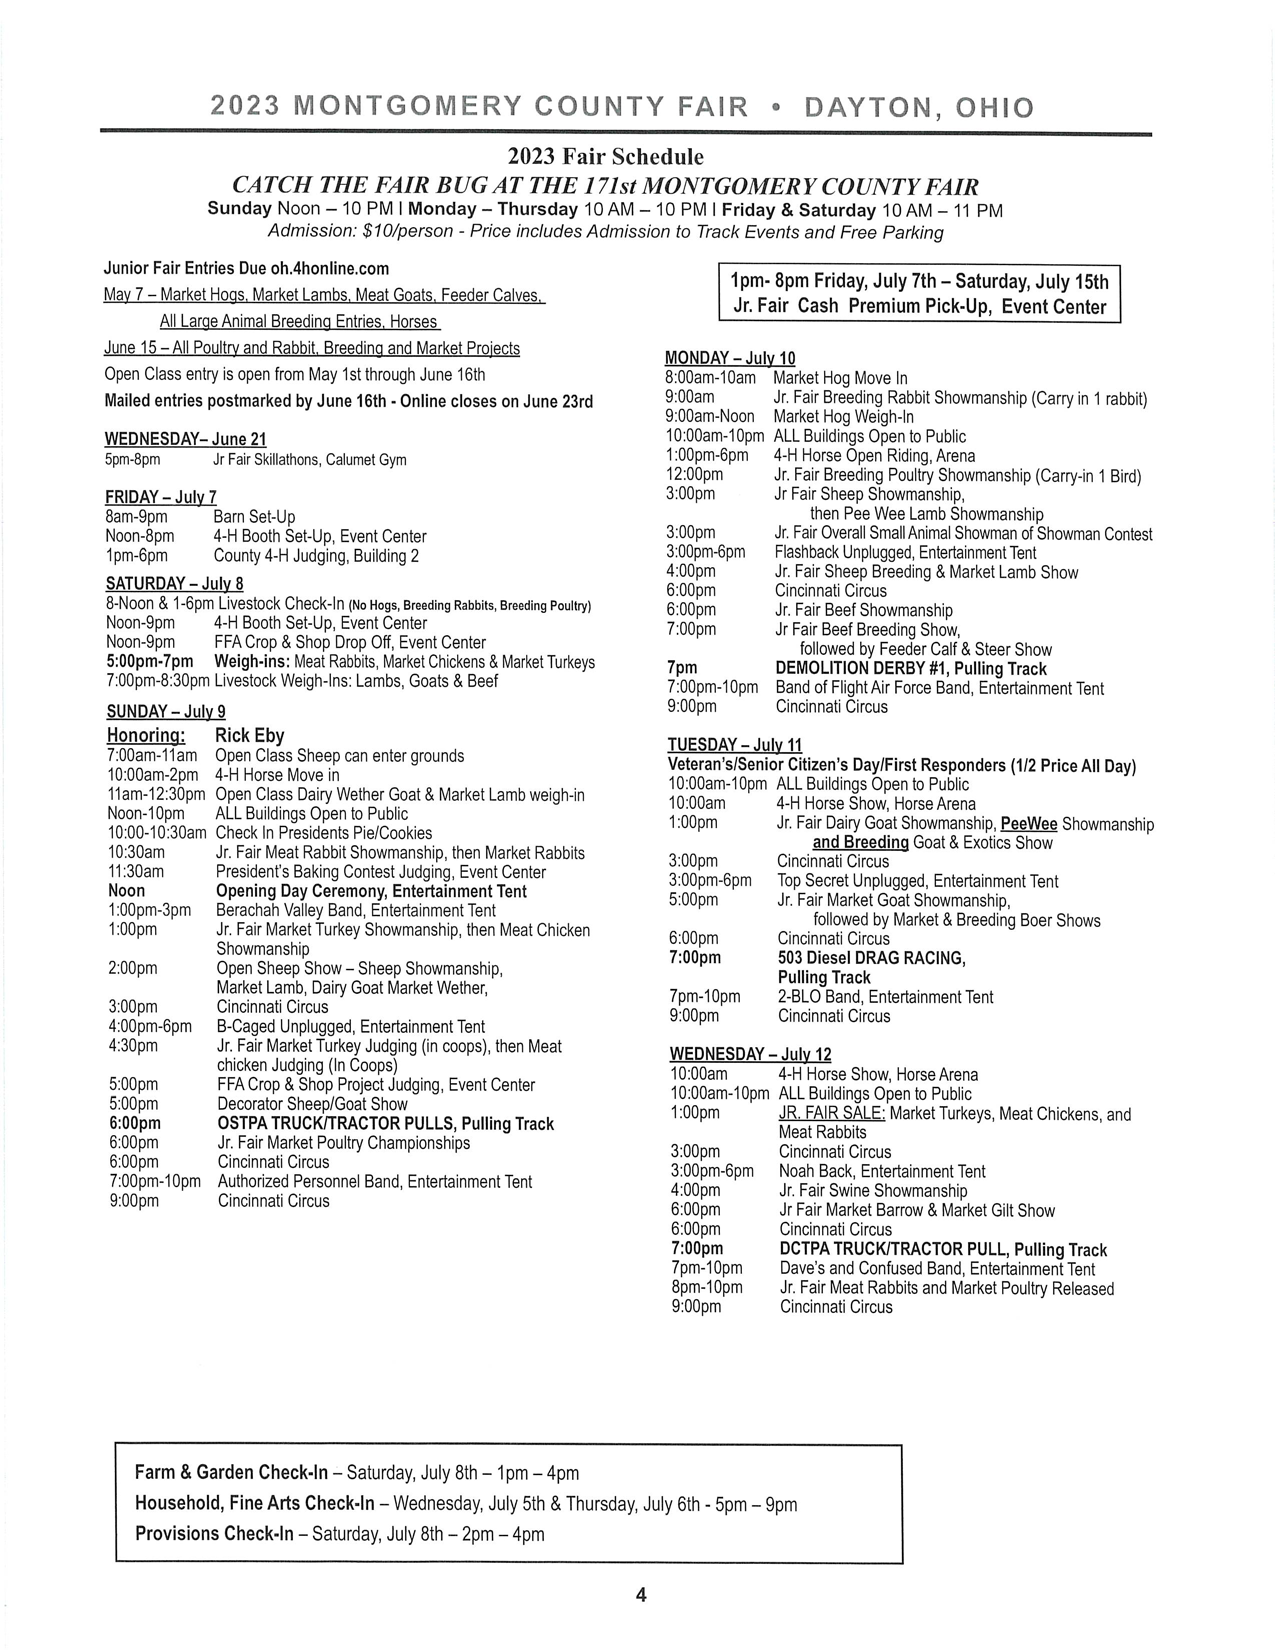 2023 Fair Schedule Montgomery County Fairgrounds